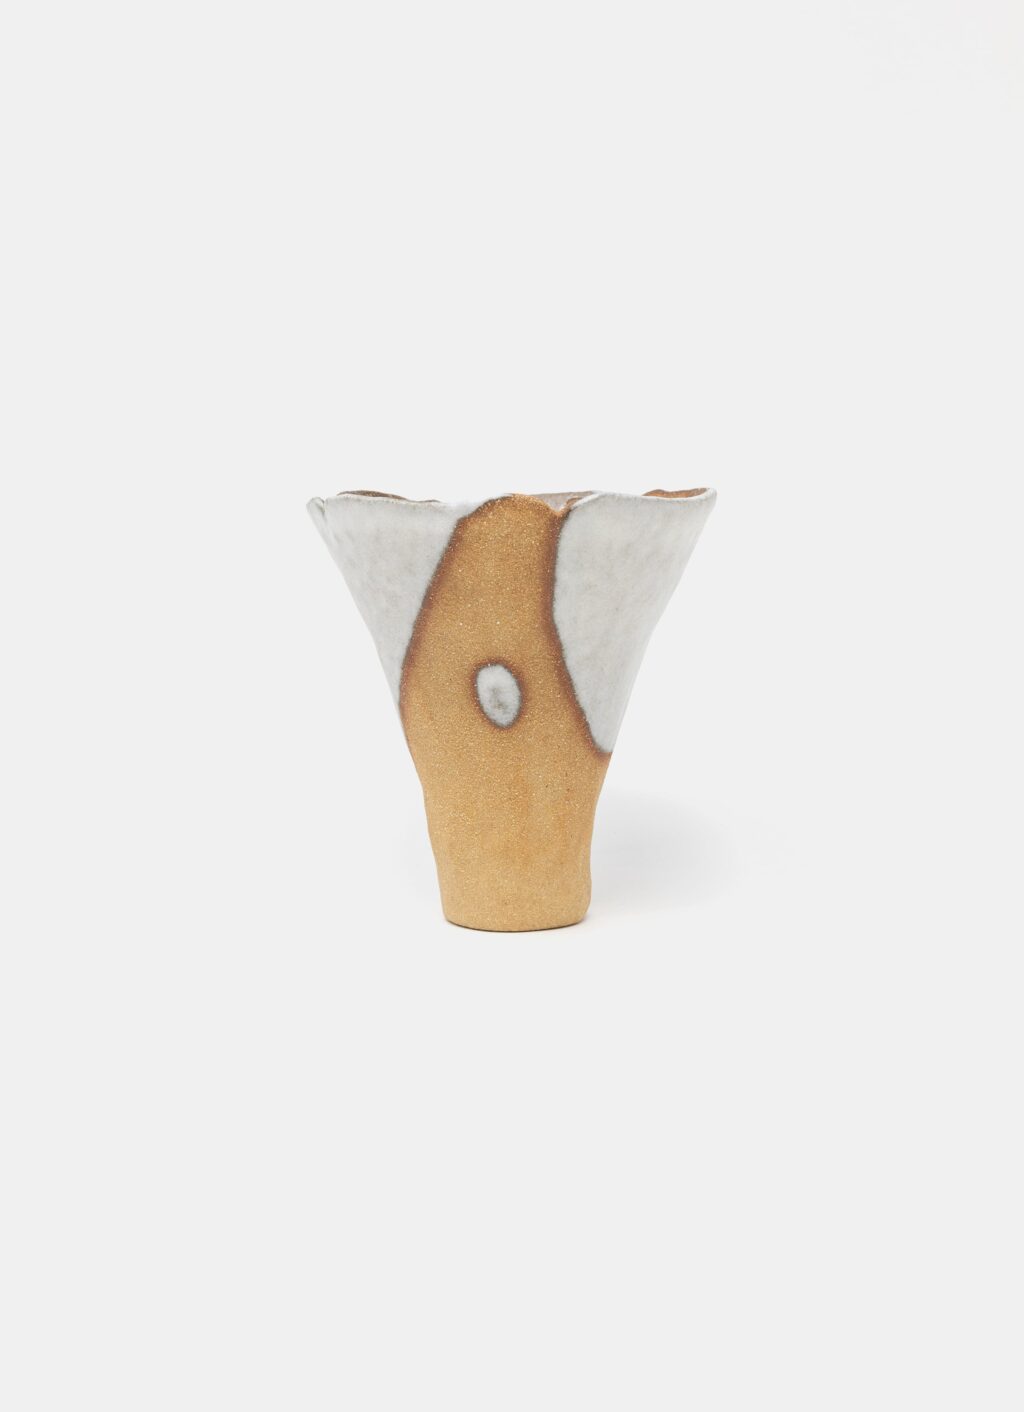 Mano Mani - Ikebana Vase - Light Brown Stoneware and white glaze - 4